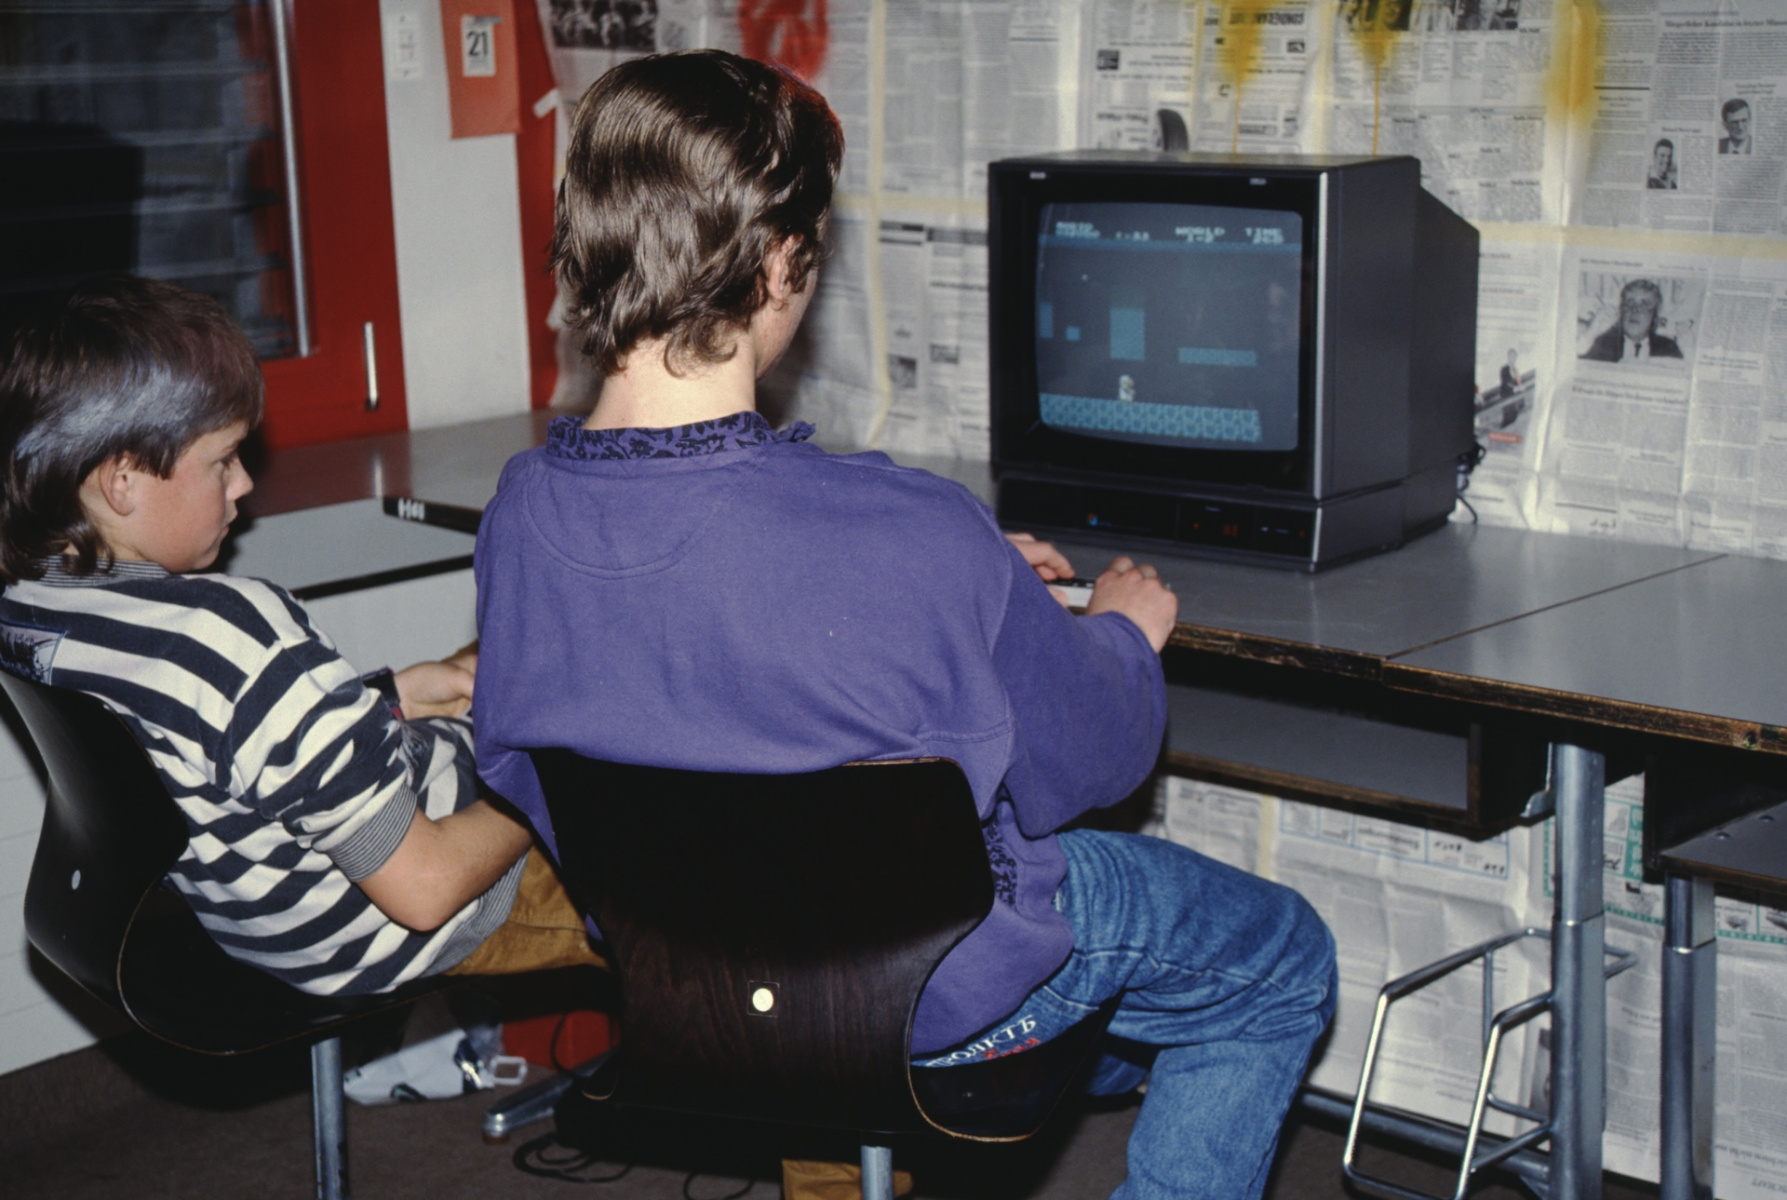 Hausfest Letten, Silvester 1990, Computerspiele 3. Real, J. Albrecht